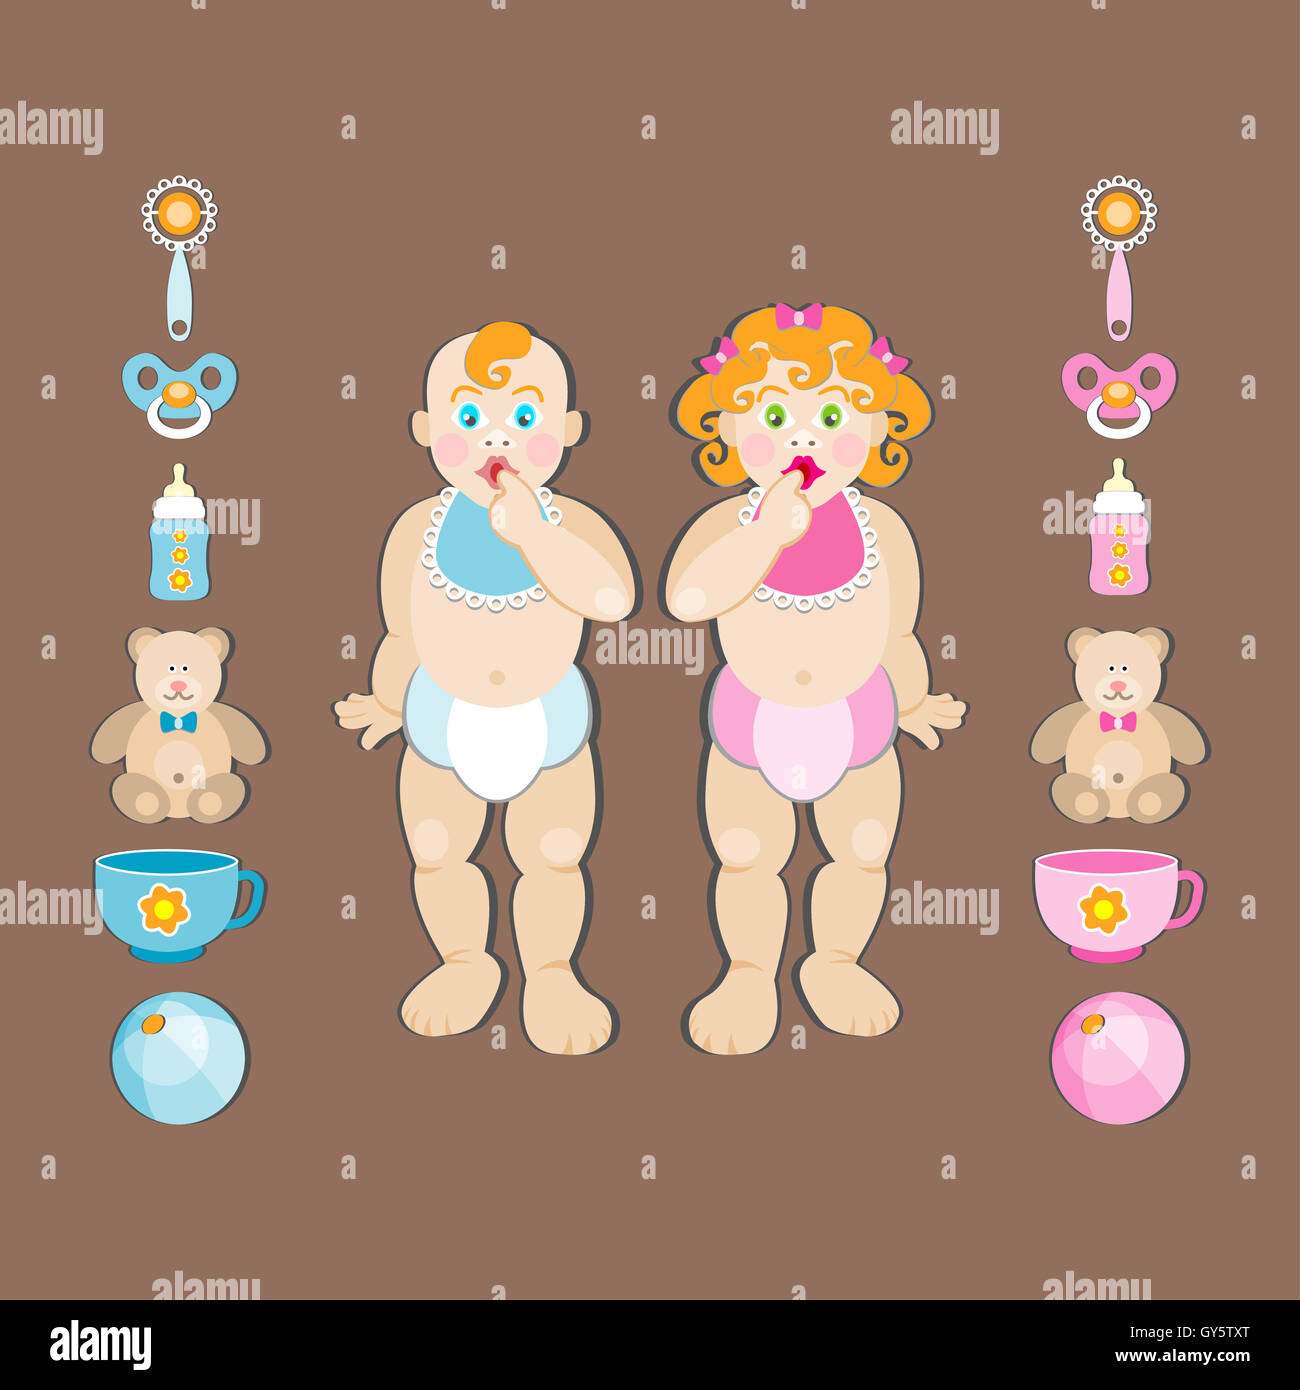 Baby Stuff Doodle Elements Set. Babies Infographics Illustration. Happy Baby Print Stock Photo